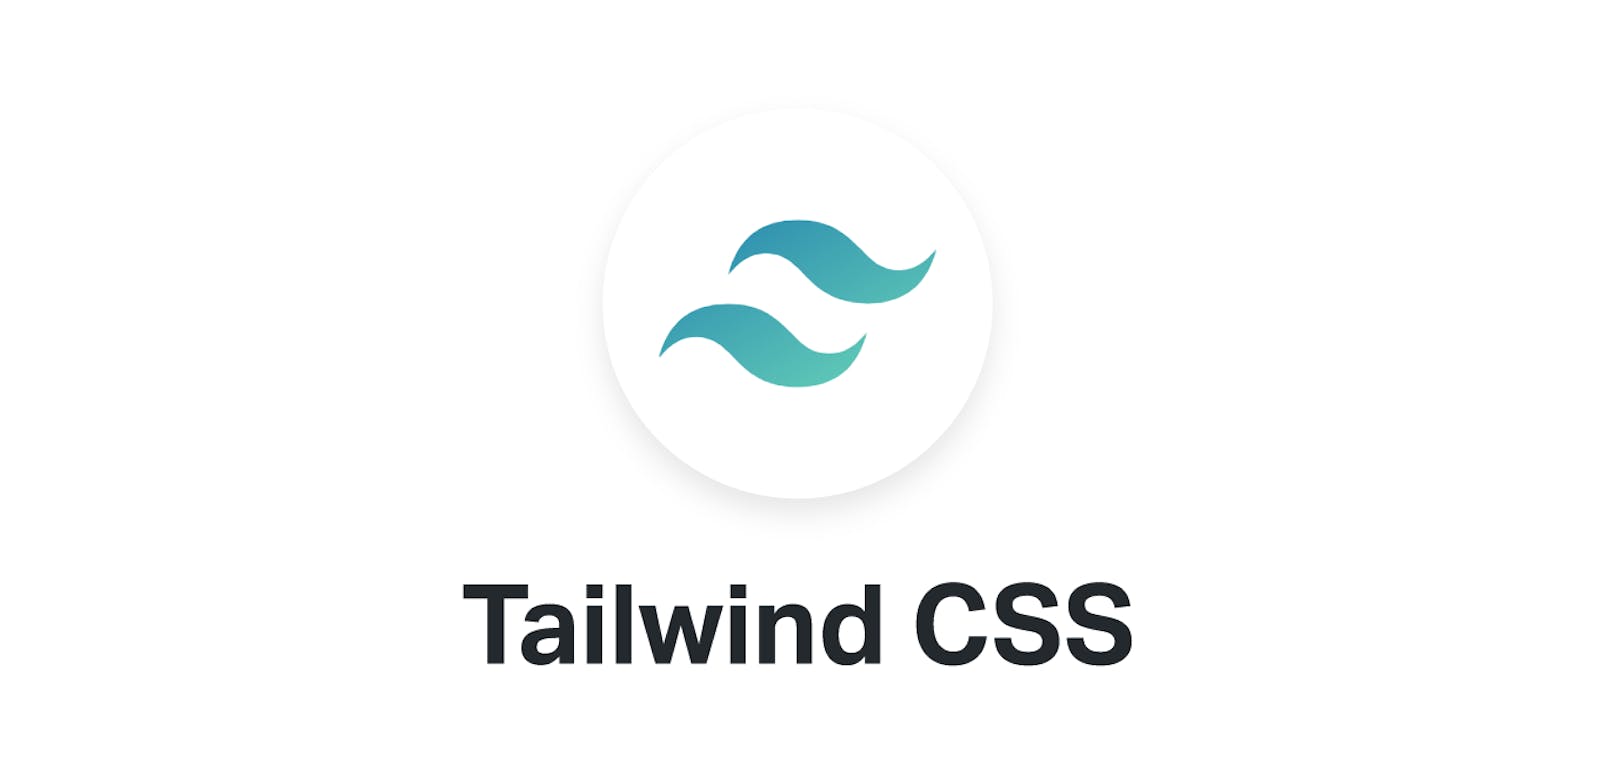 Tailwind-CSS tutorial using PostCSS